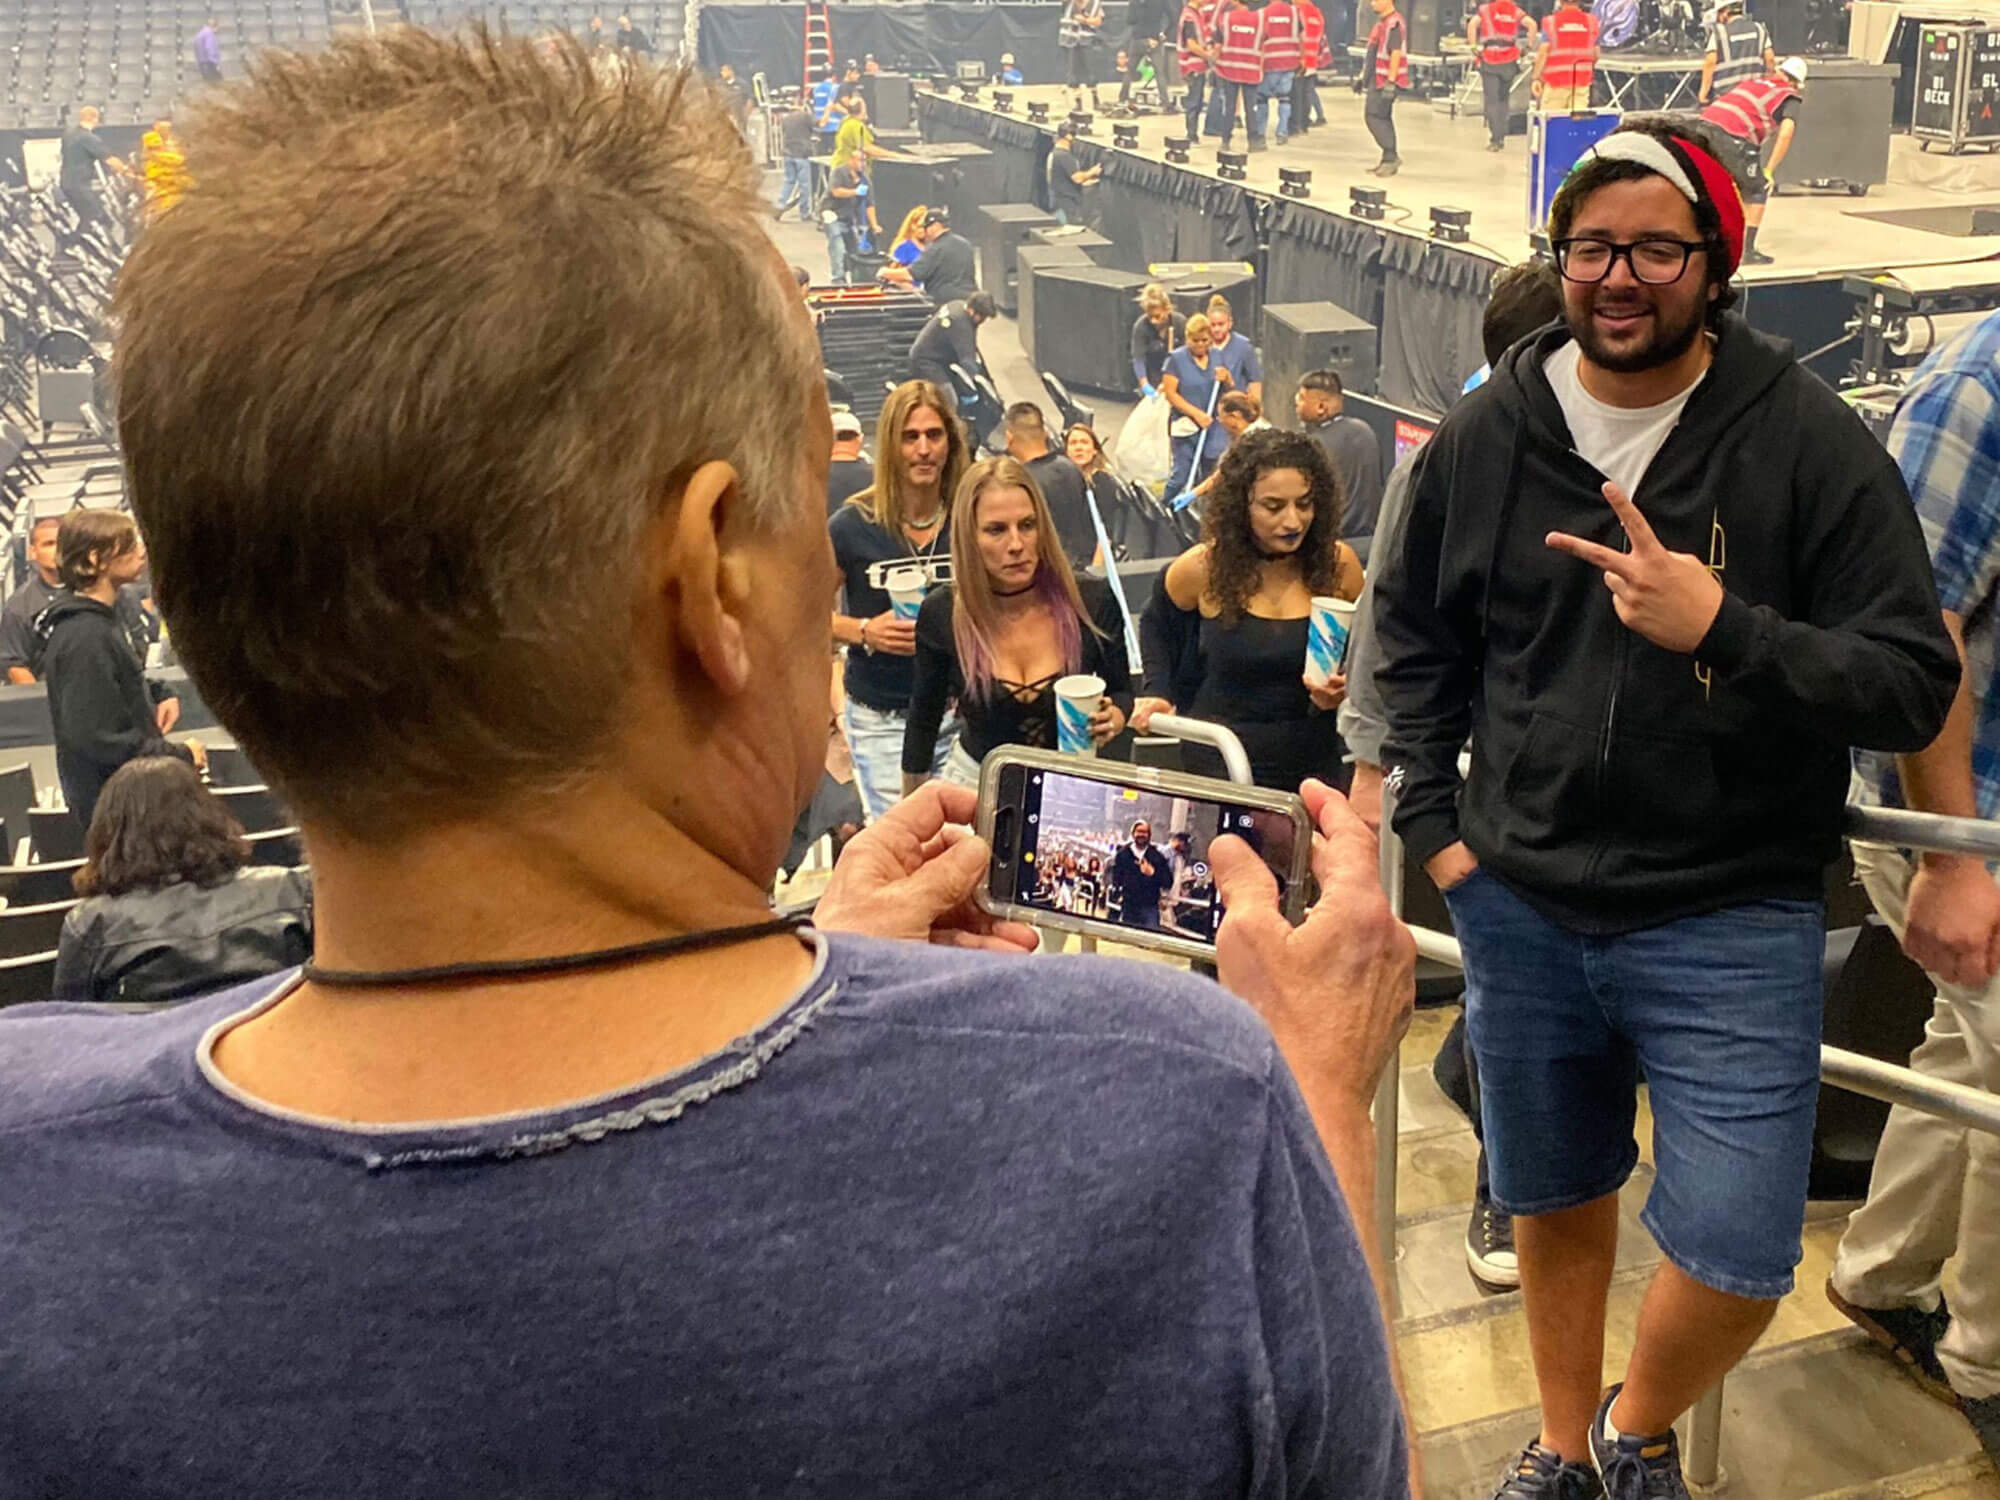 Eddie Van Halen takes a picture of an unwitting fan